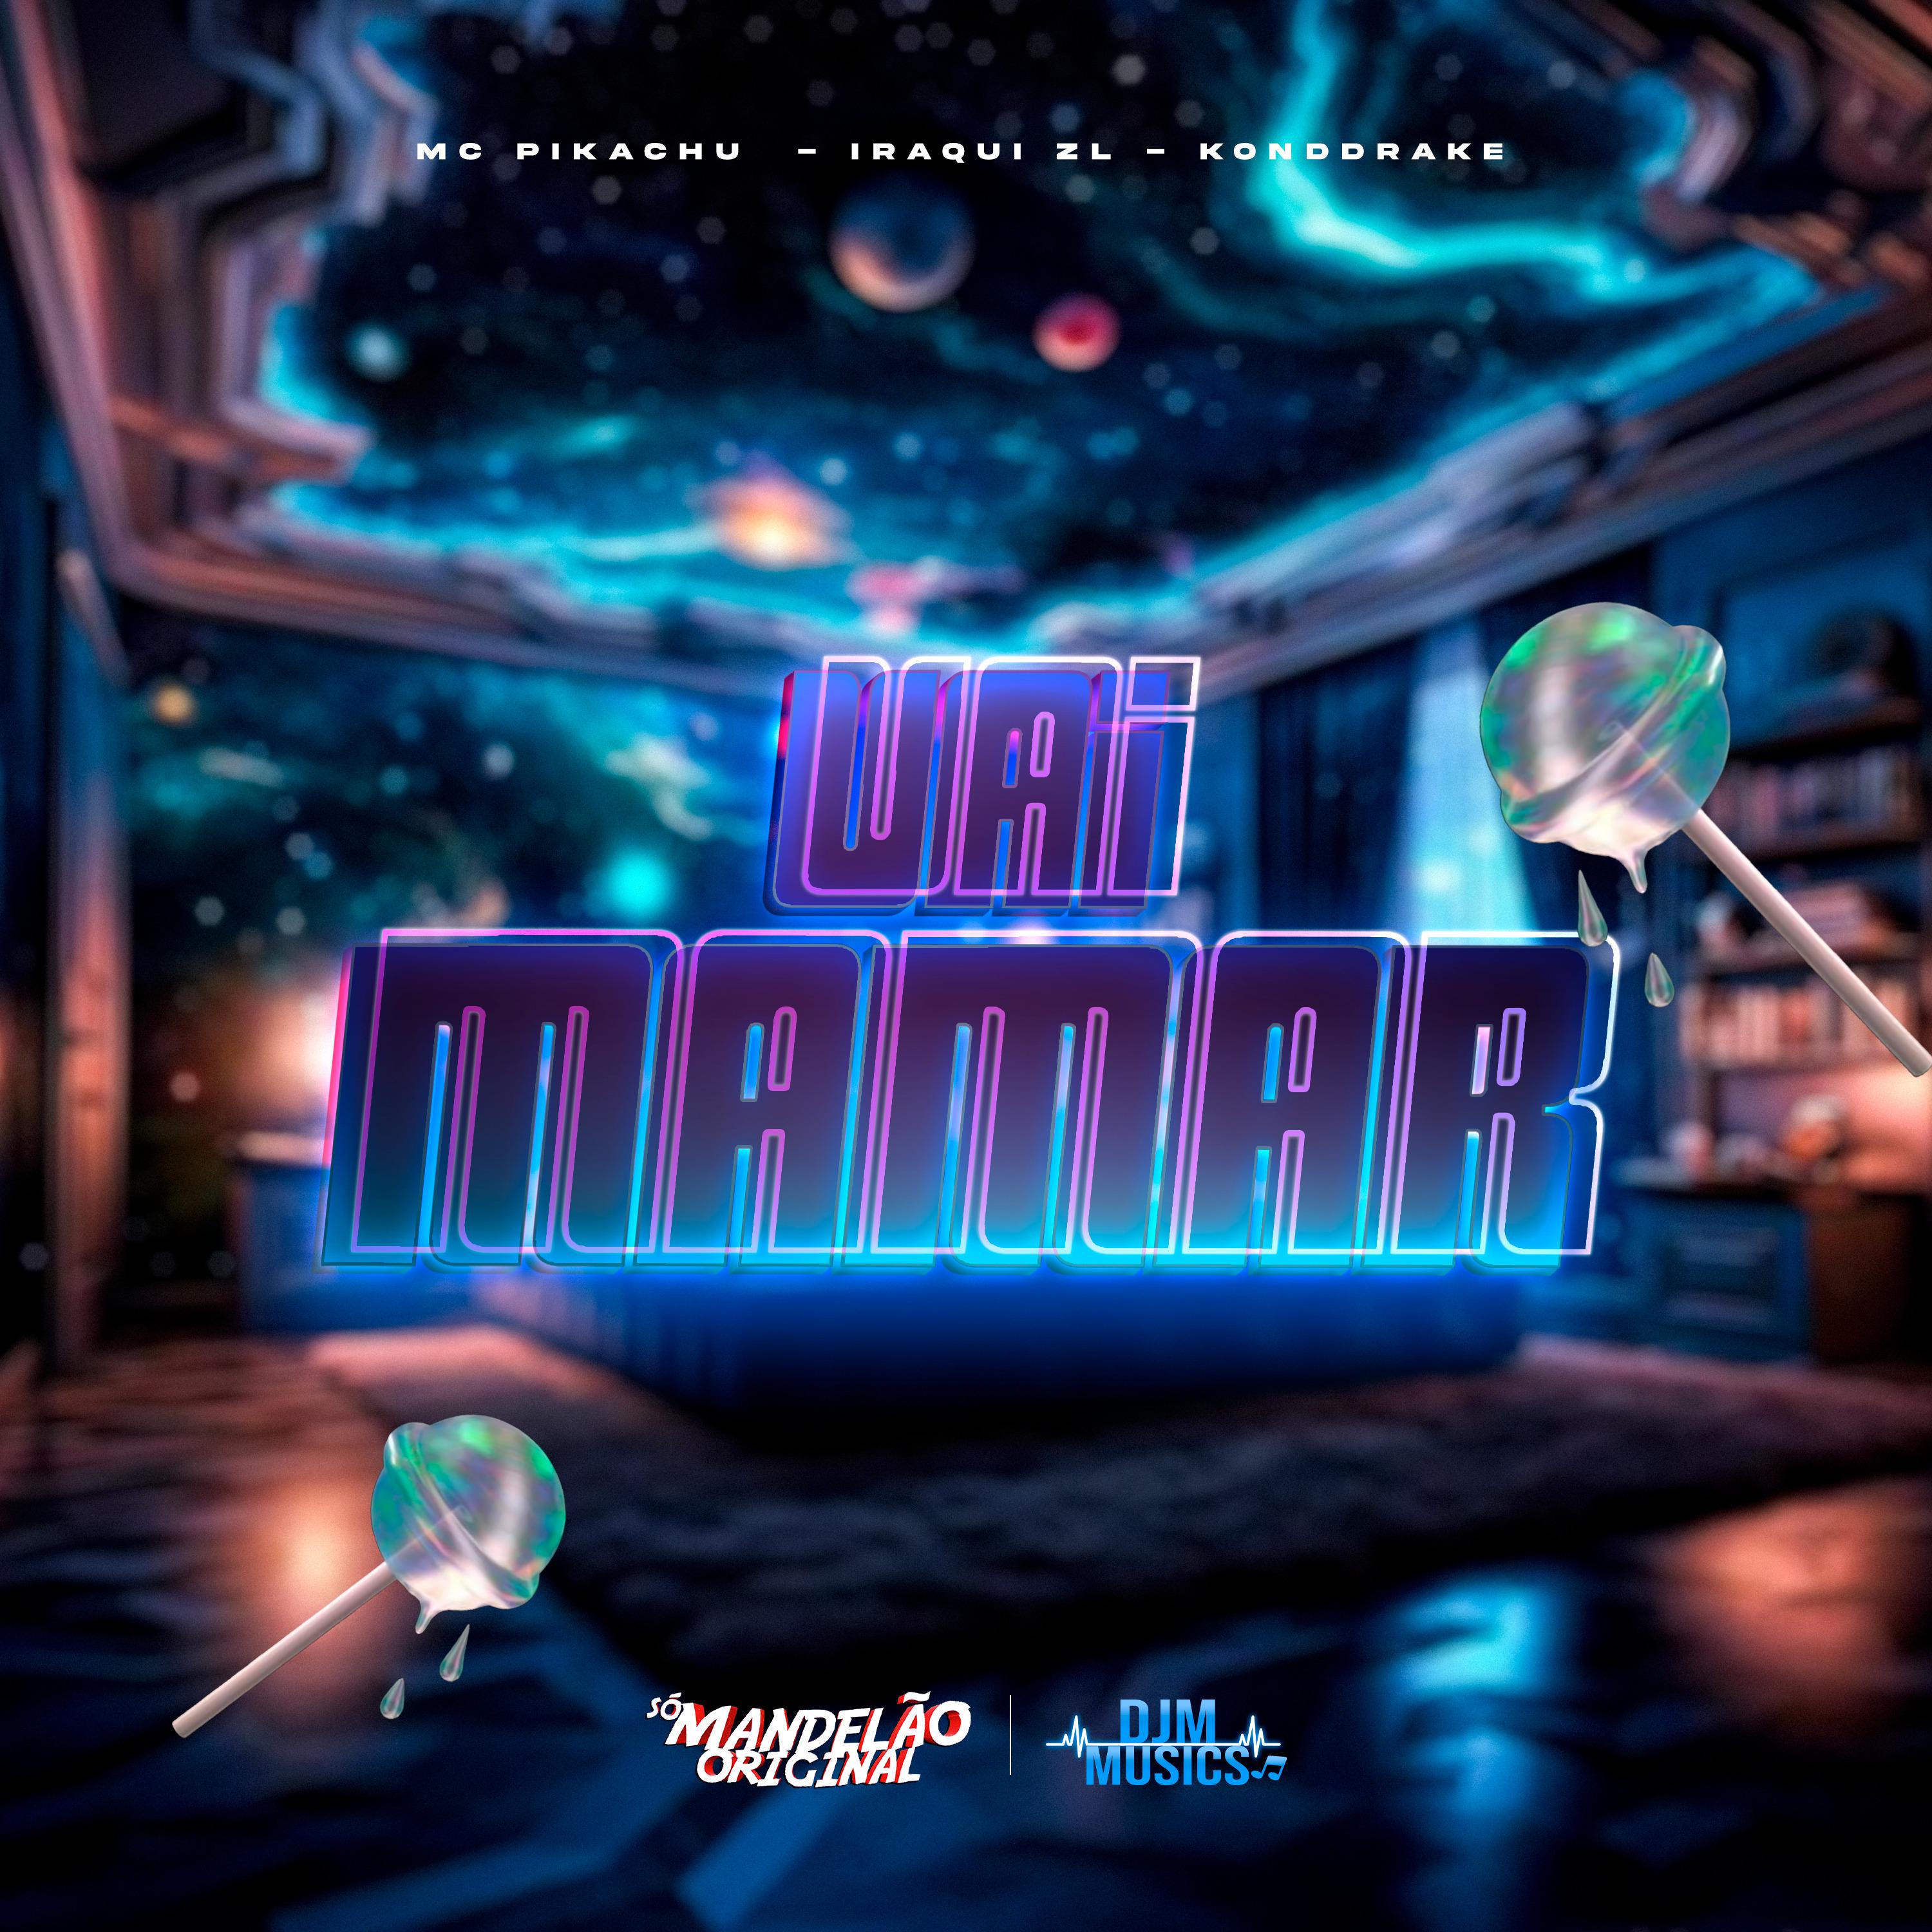 Постер альбома Vai Mamar